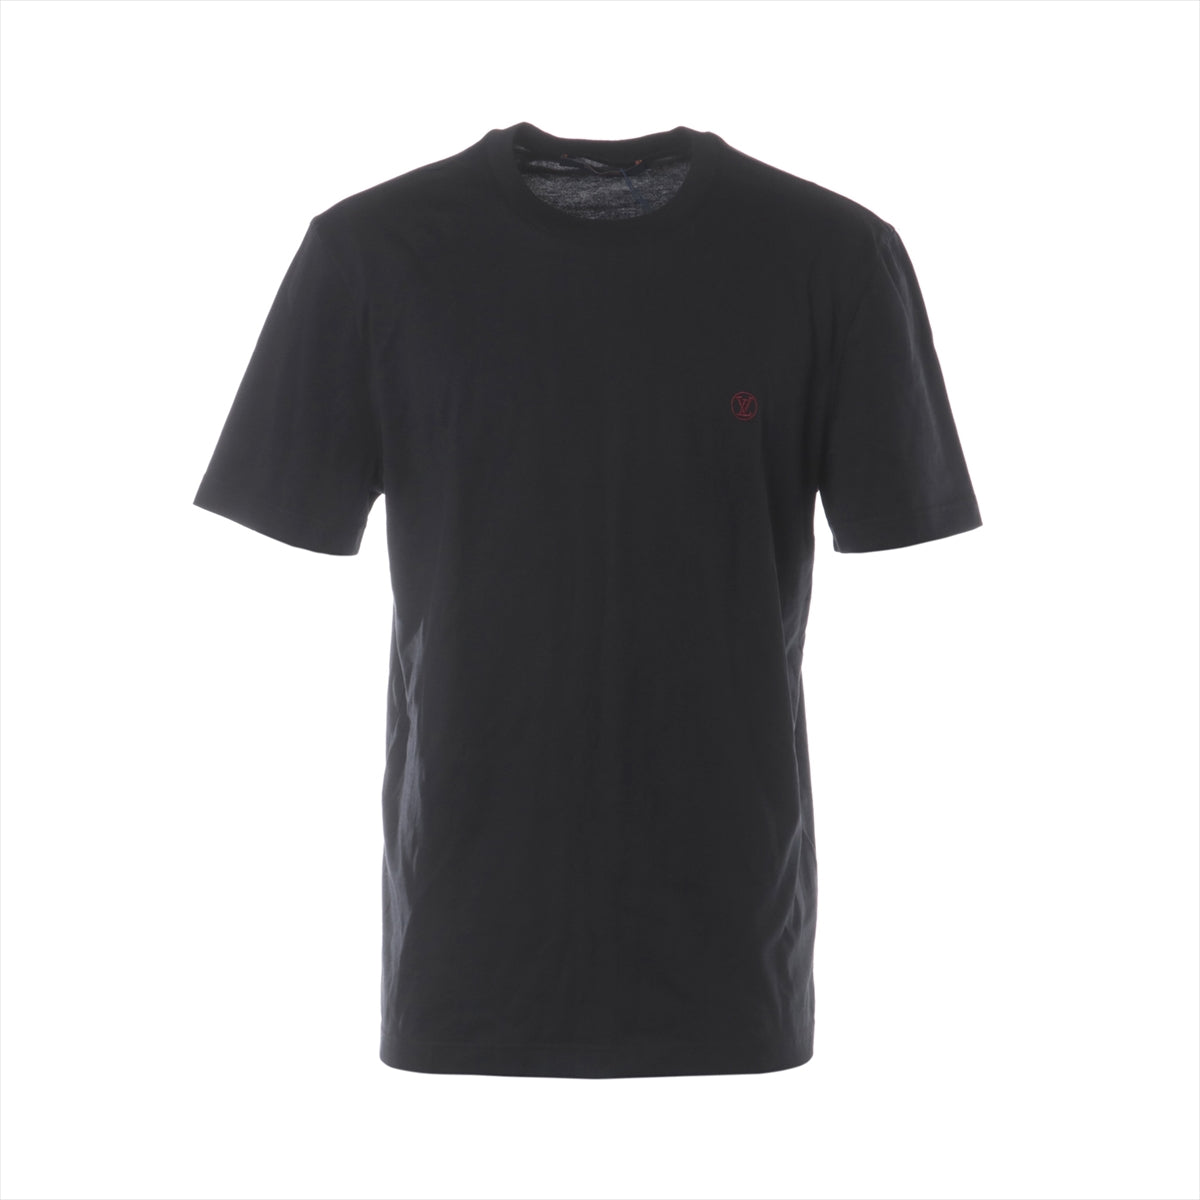 Louis Vuitton 21SS Cotton T-shirt M Men's Black  RM211Q LV Circle logo